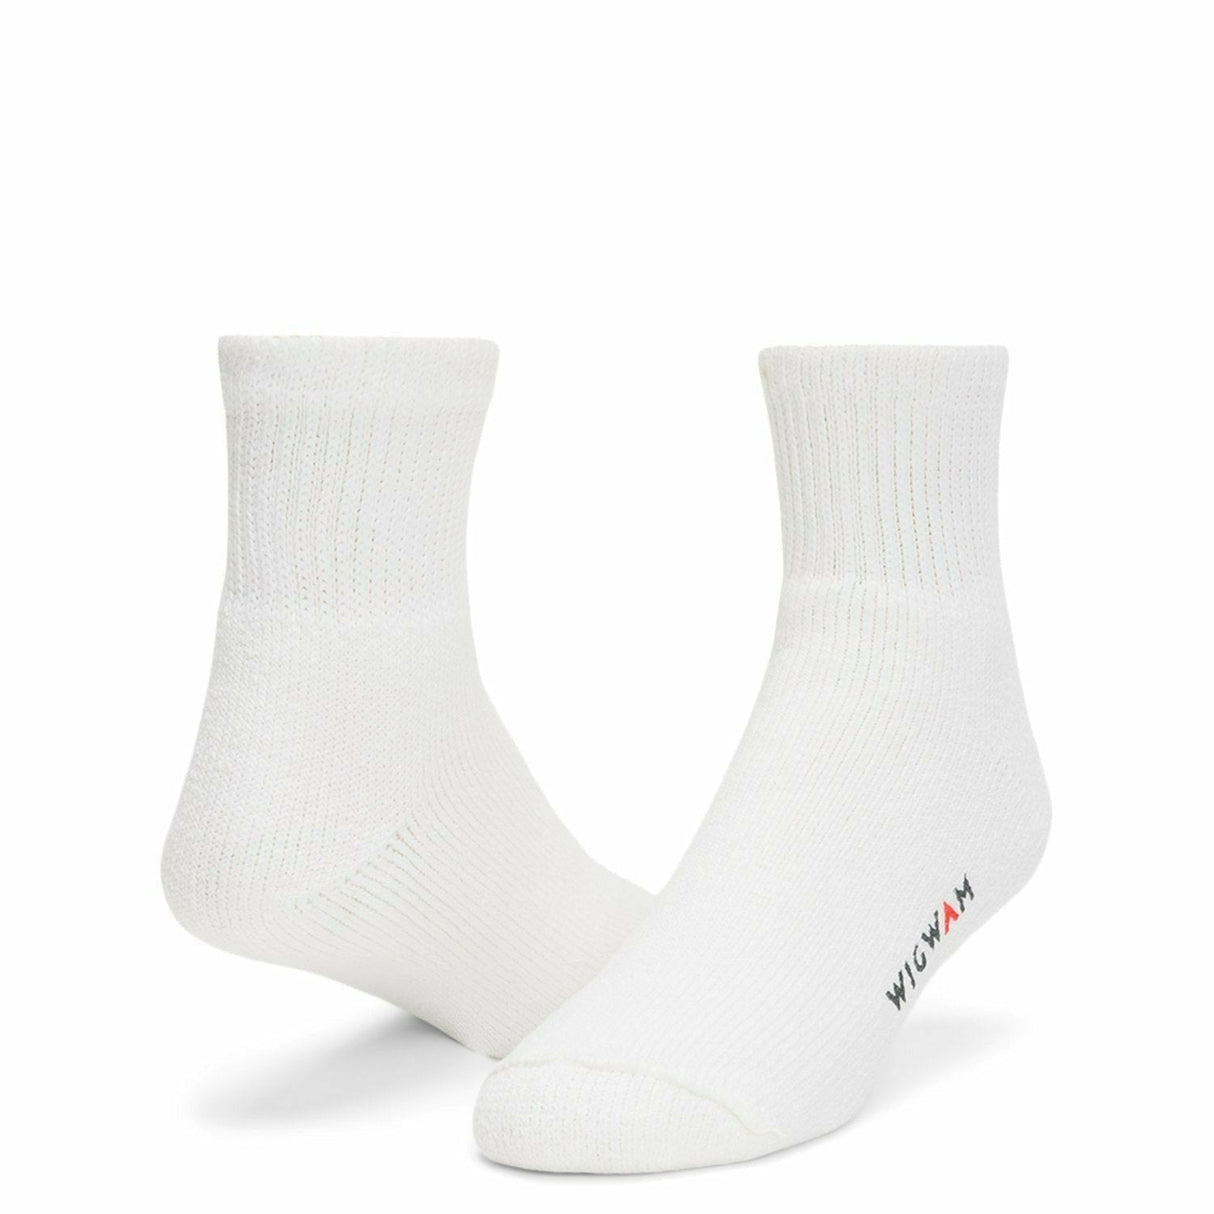 Wigwam King Cotton Quarter Socks  -  Medium / White